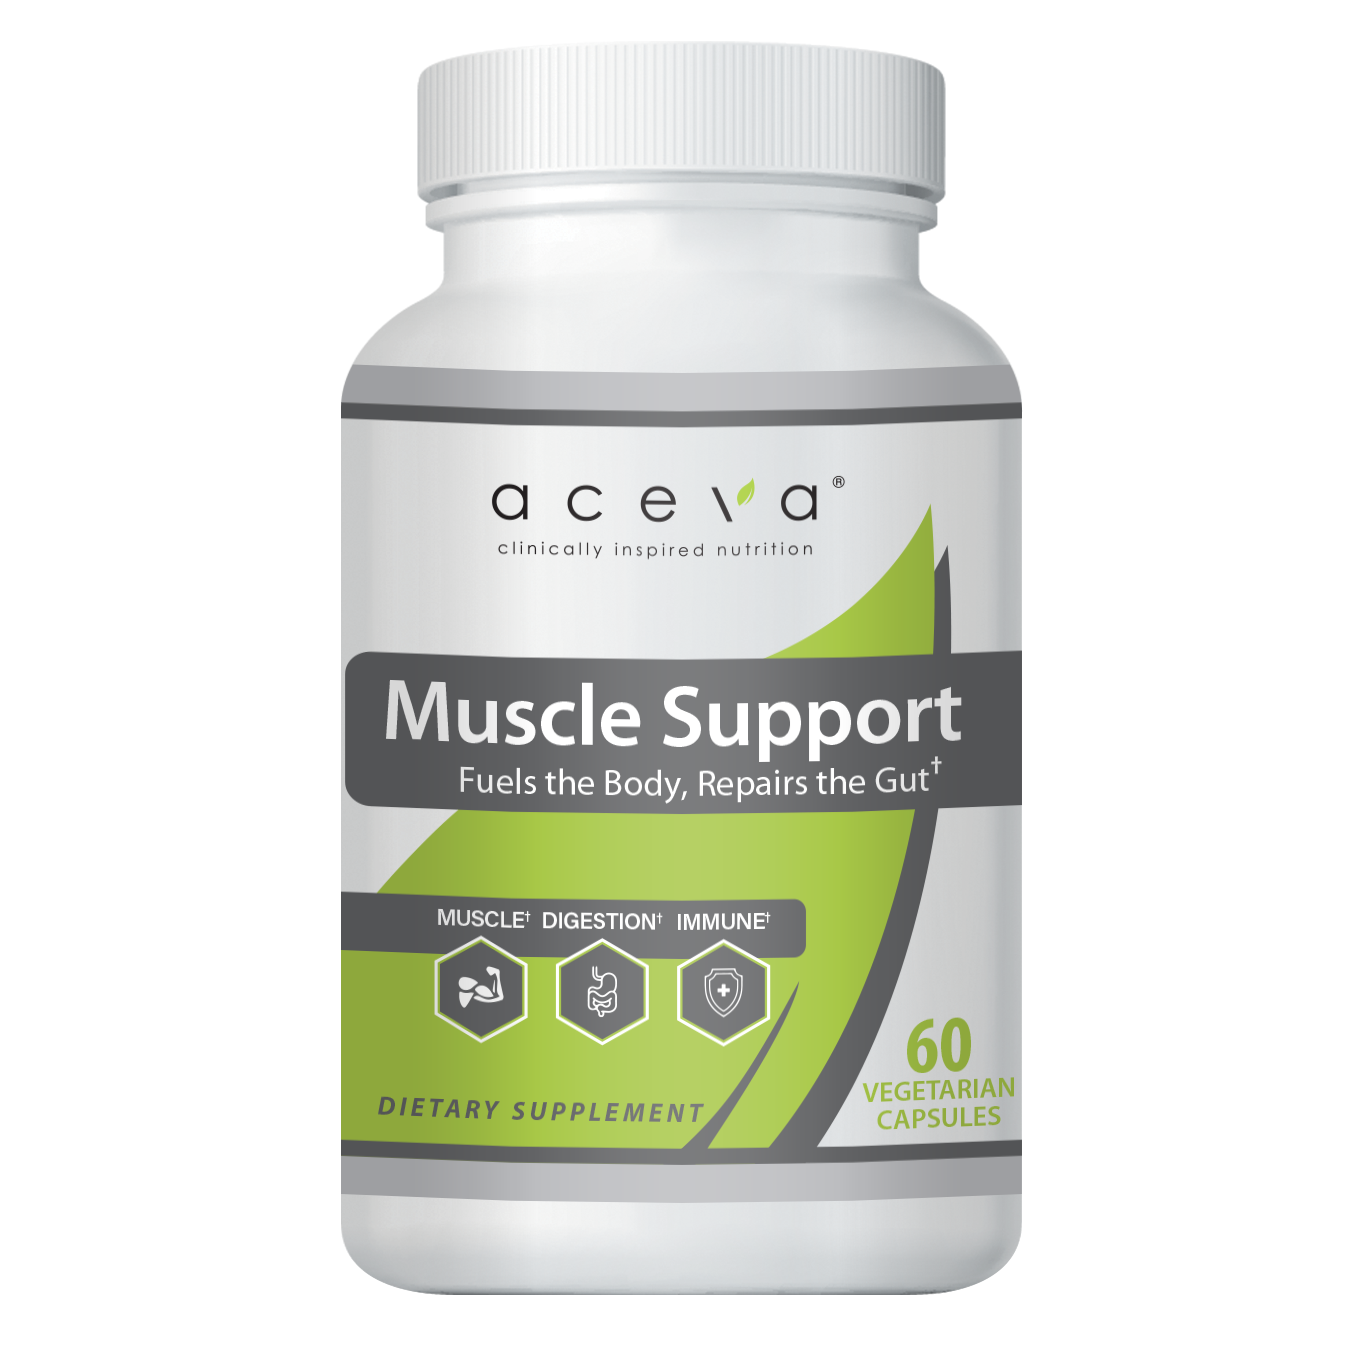 Muscle repair supplements